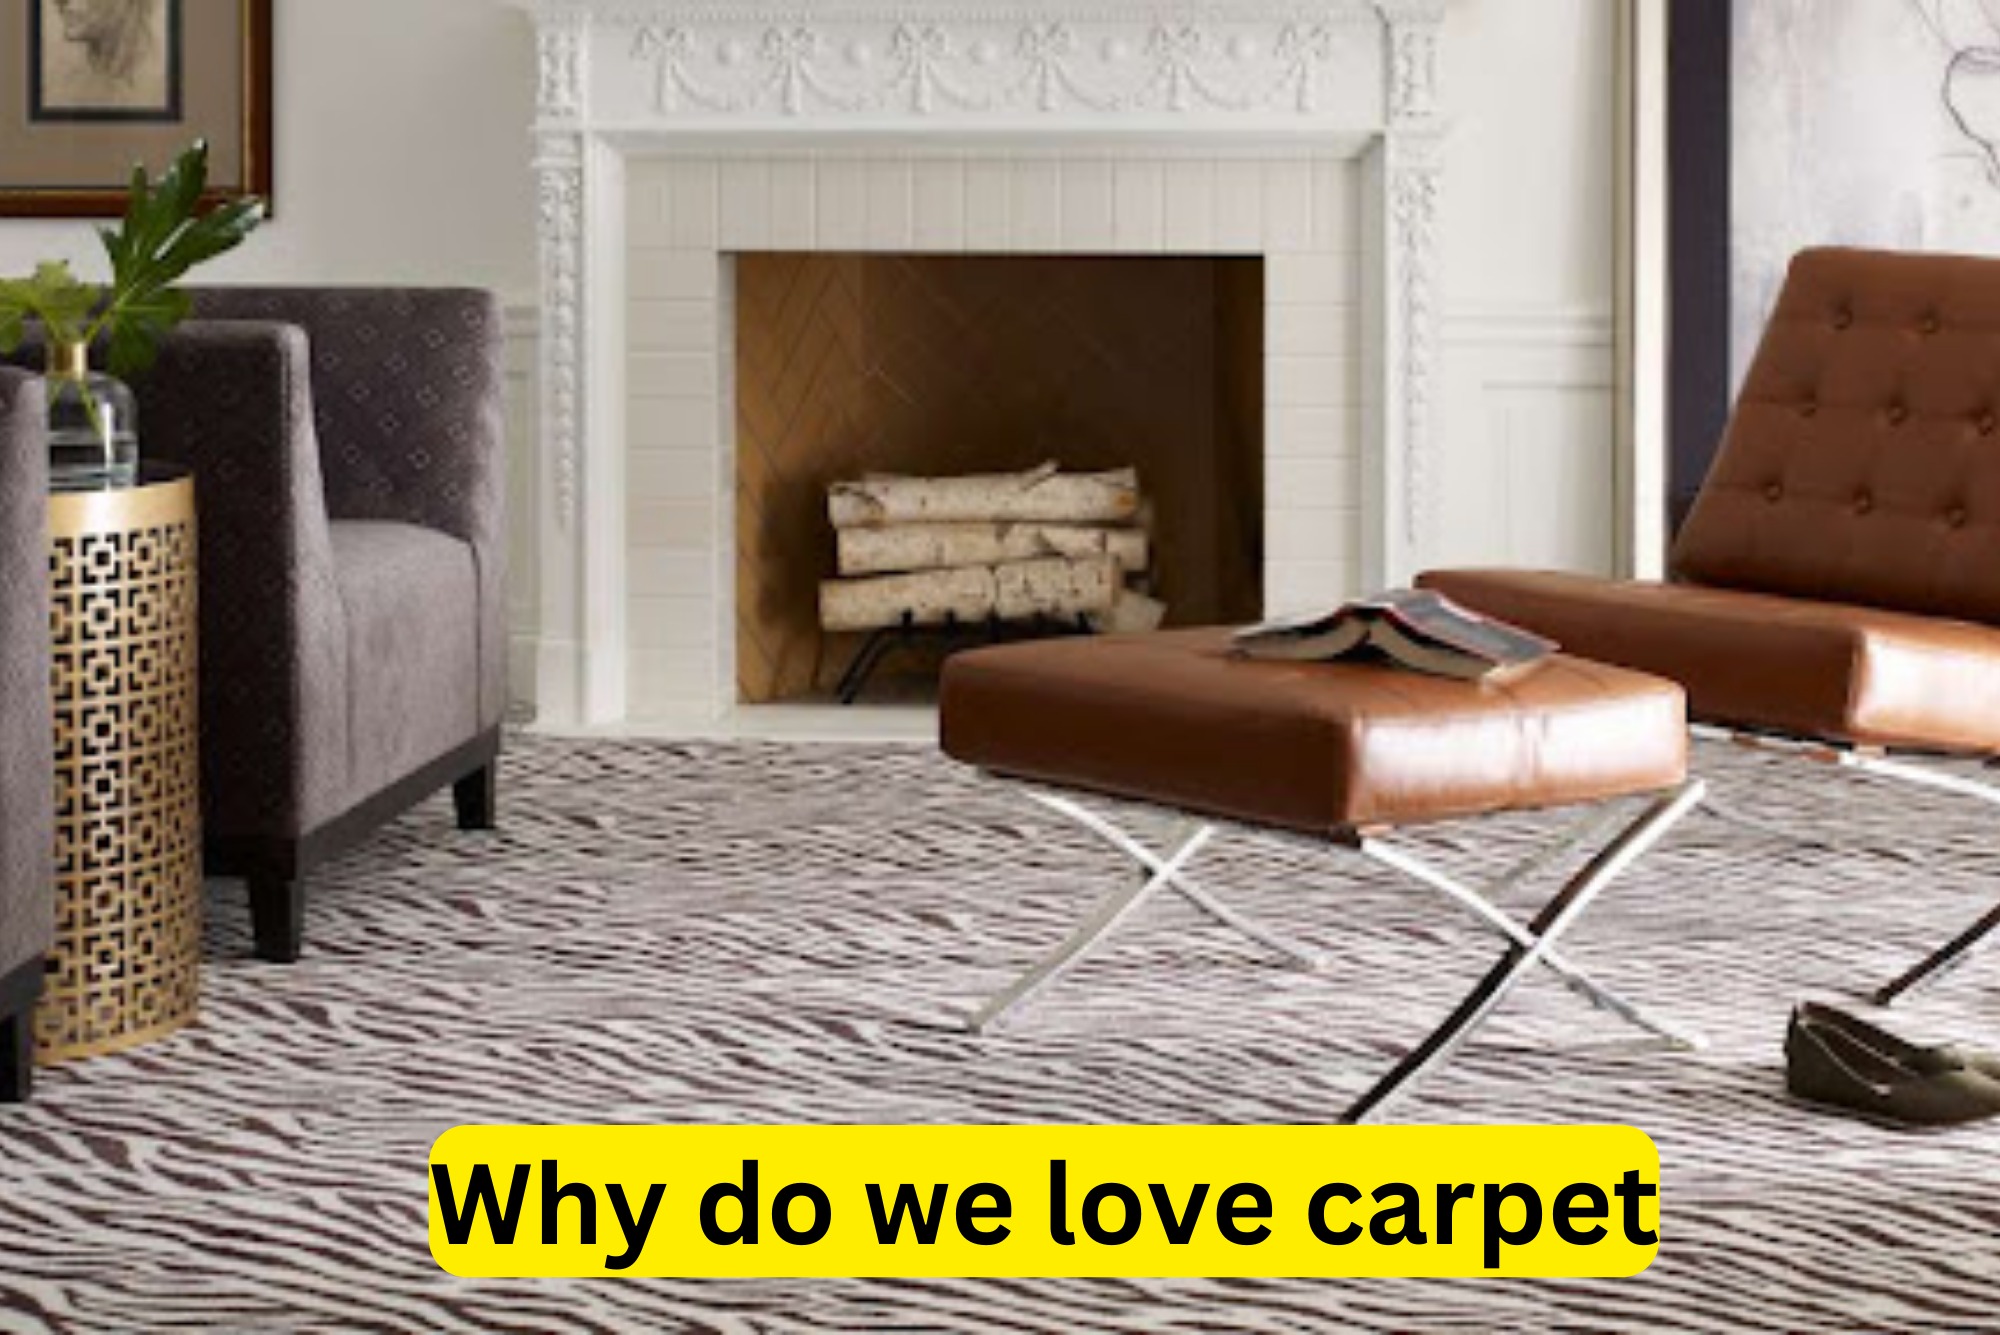 Why do we love carpet